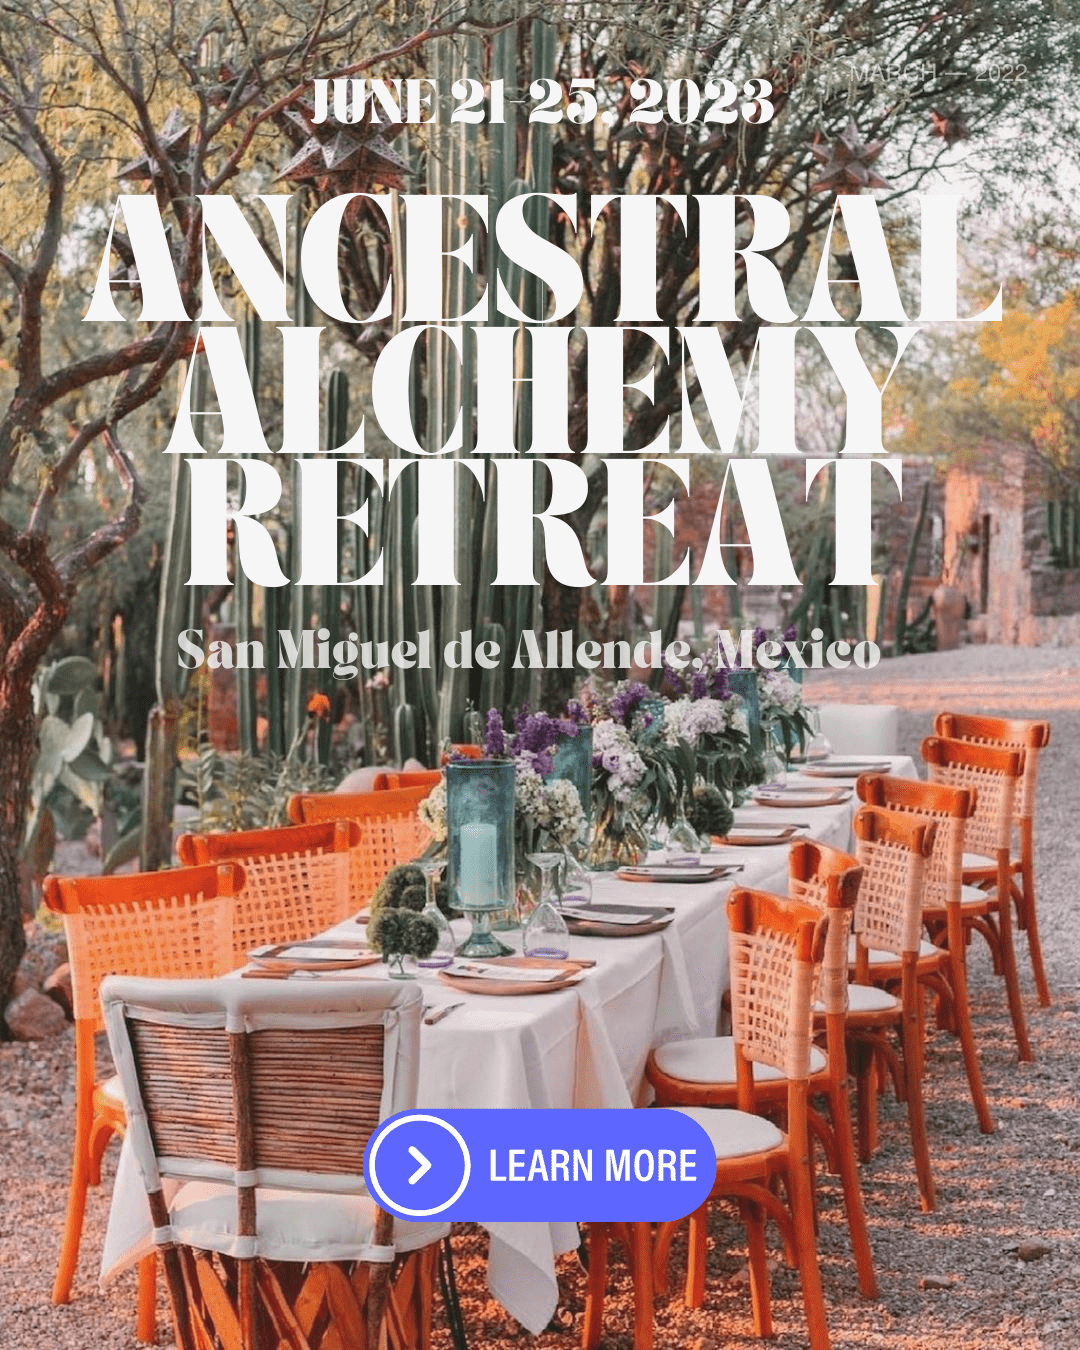 Ancestral Alchemy Retreat